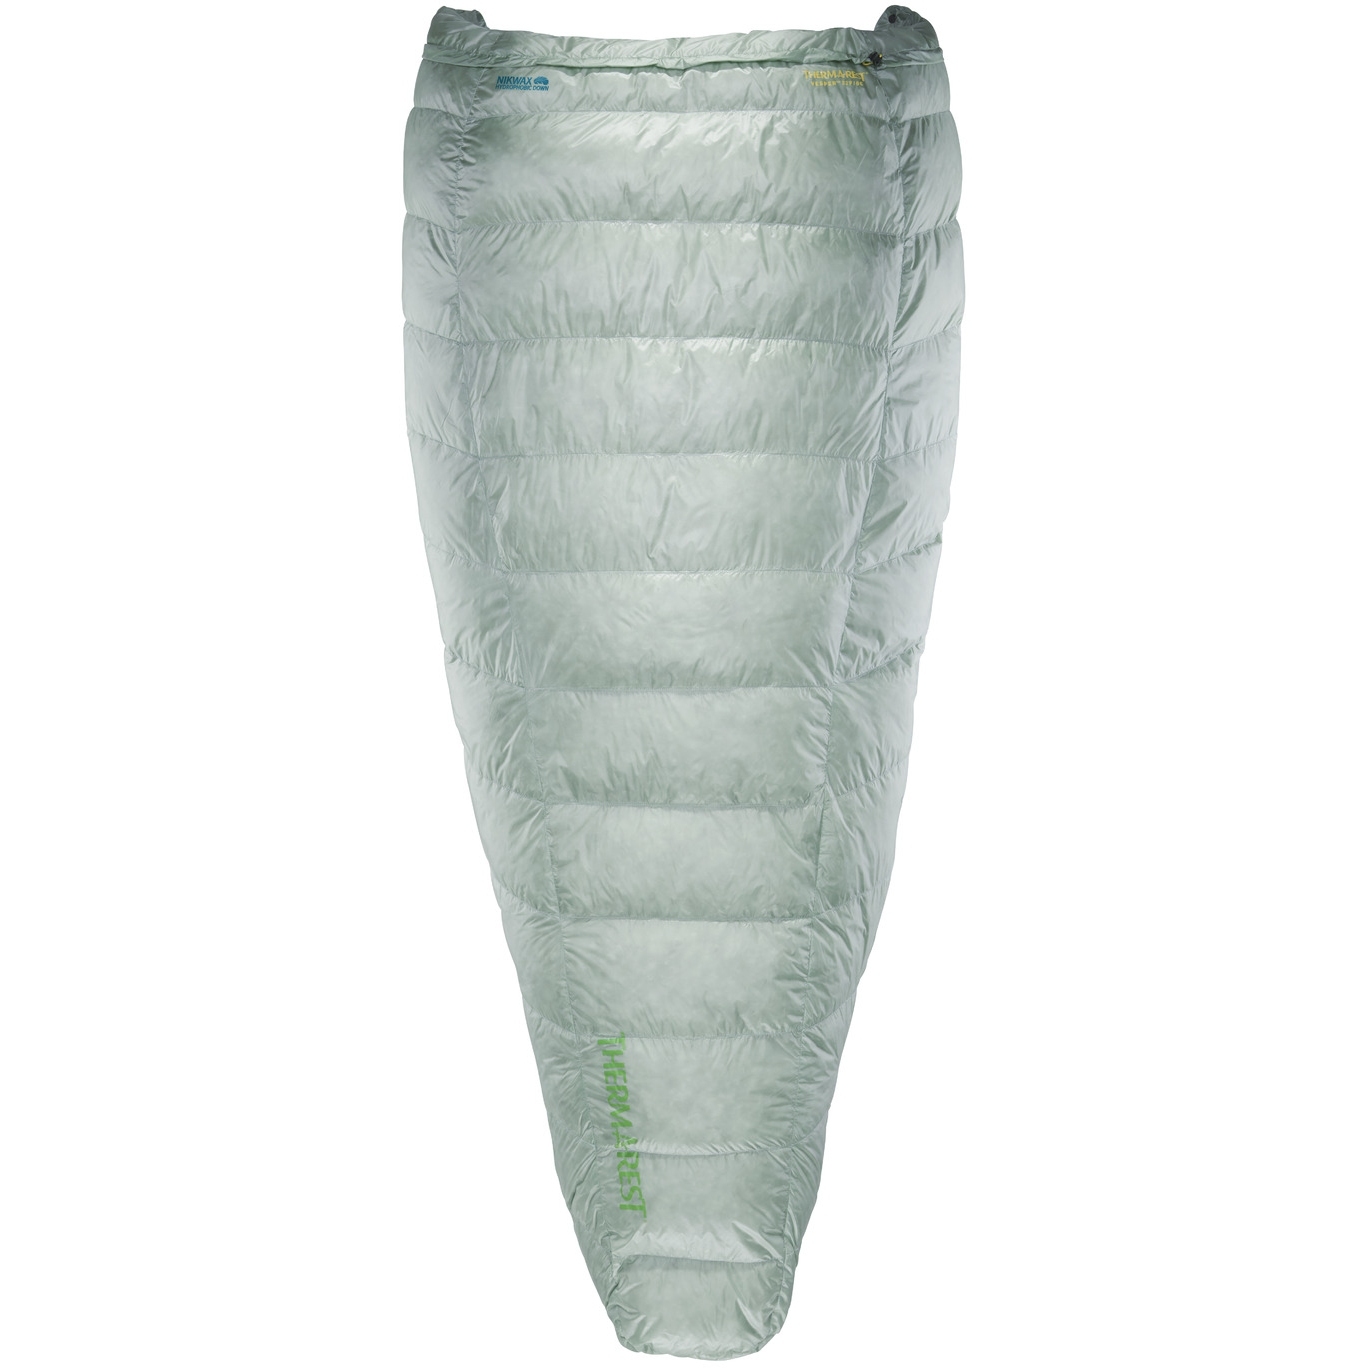 Productfoto van Therm-a-Rest Vesper 32F/0C UL Quilt - Regular - Sleeping Bag - Ether